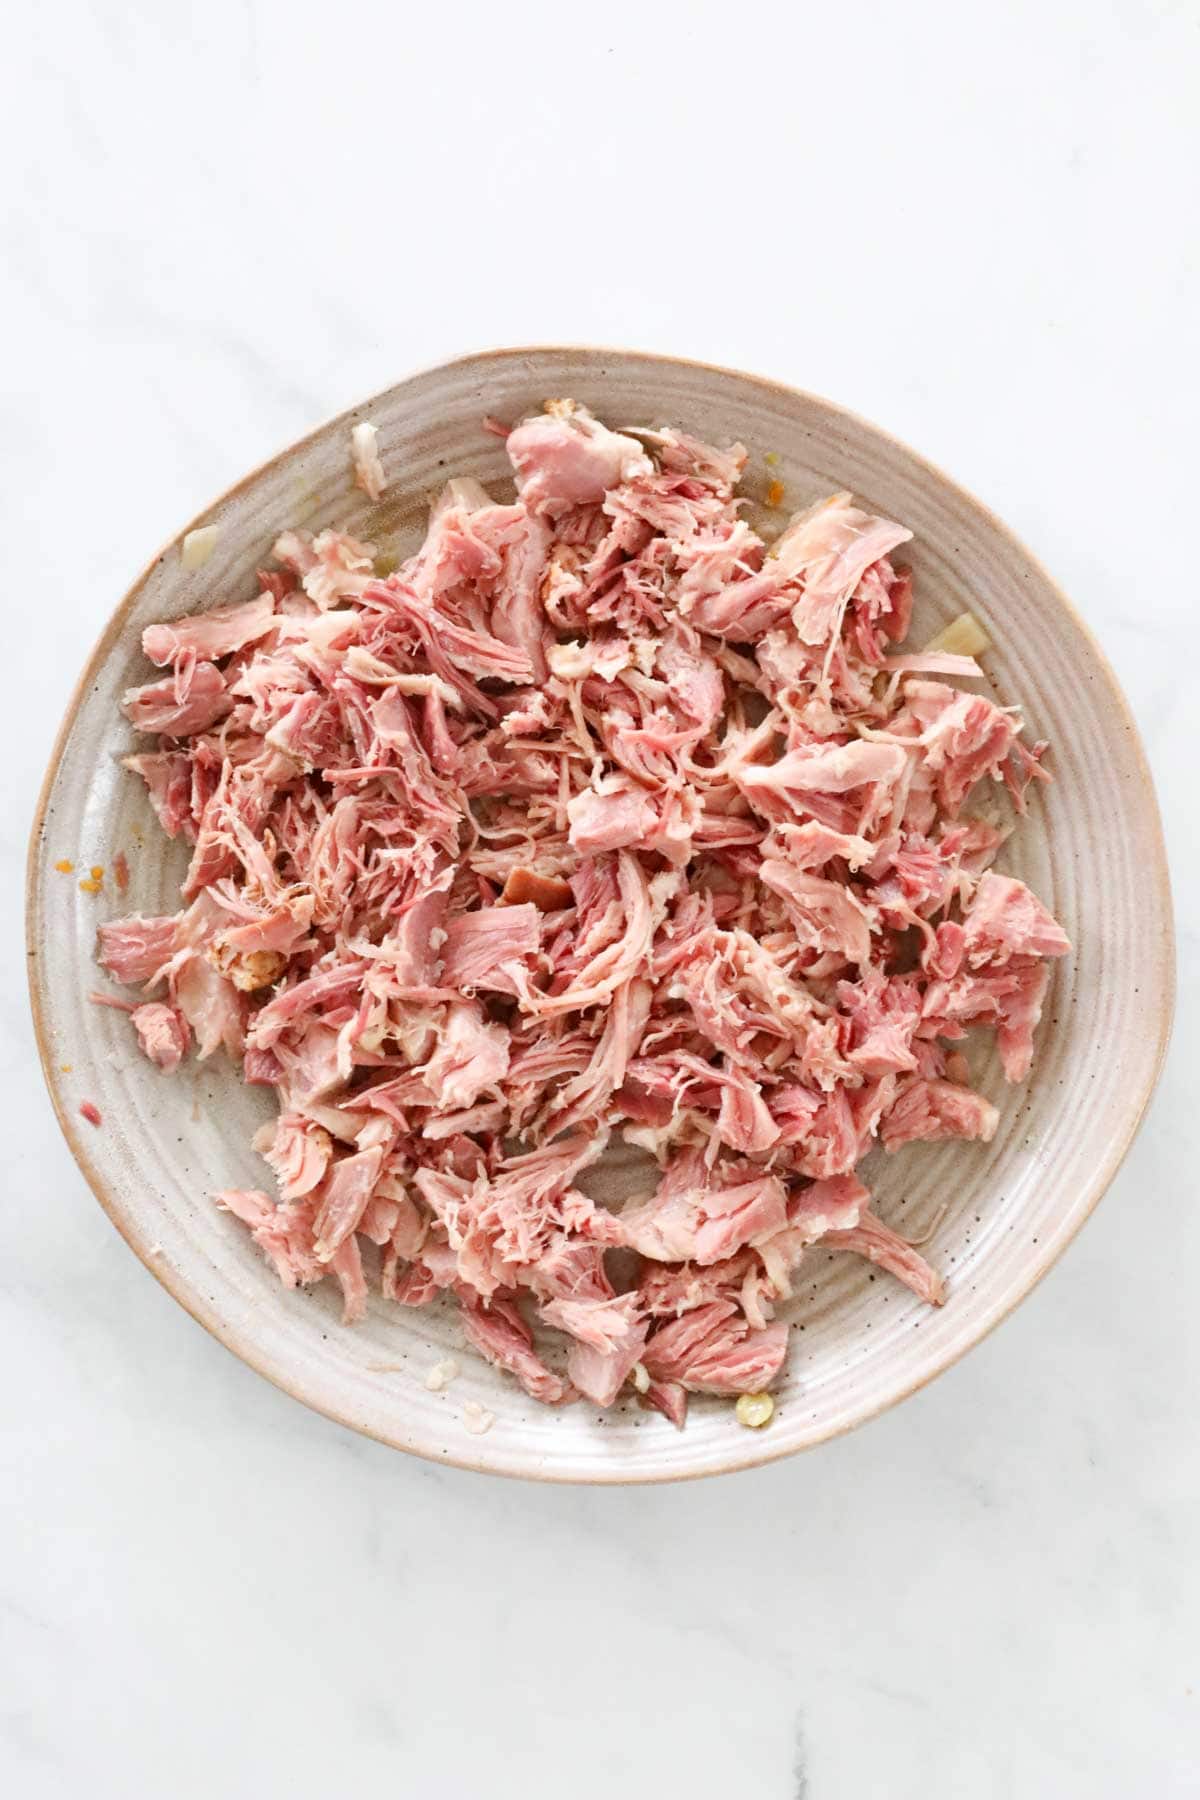 A plate of shredded ham hock.